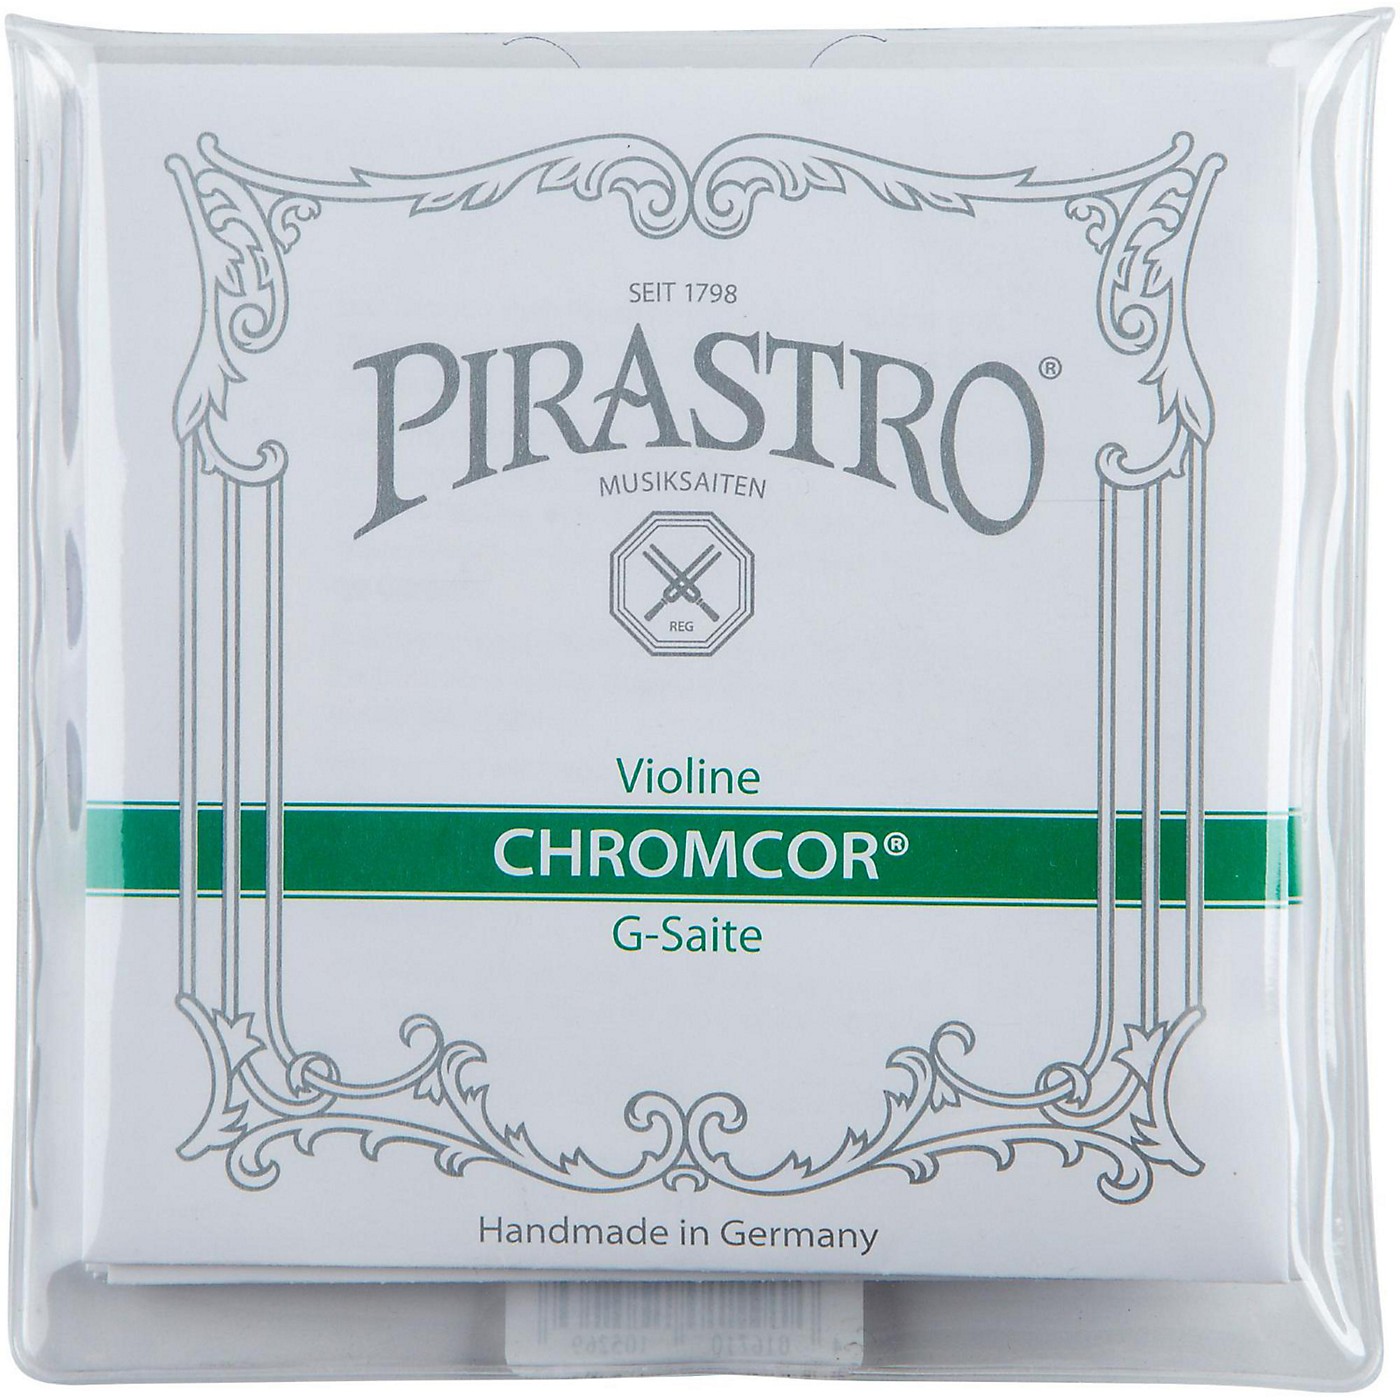 Pirastro Chromcor Series Violin String Set thumbnail